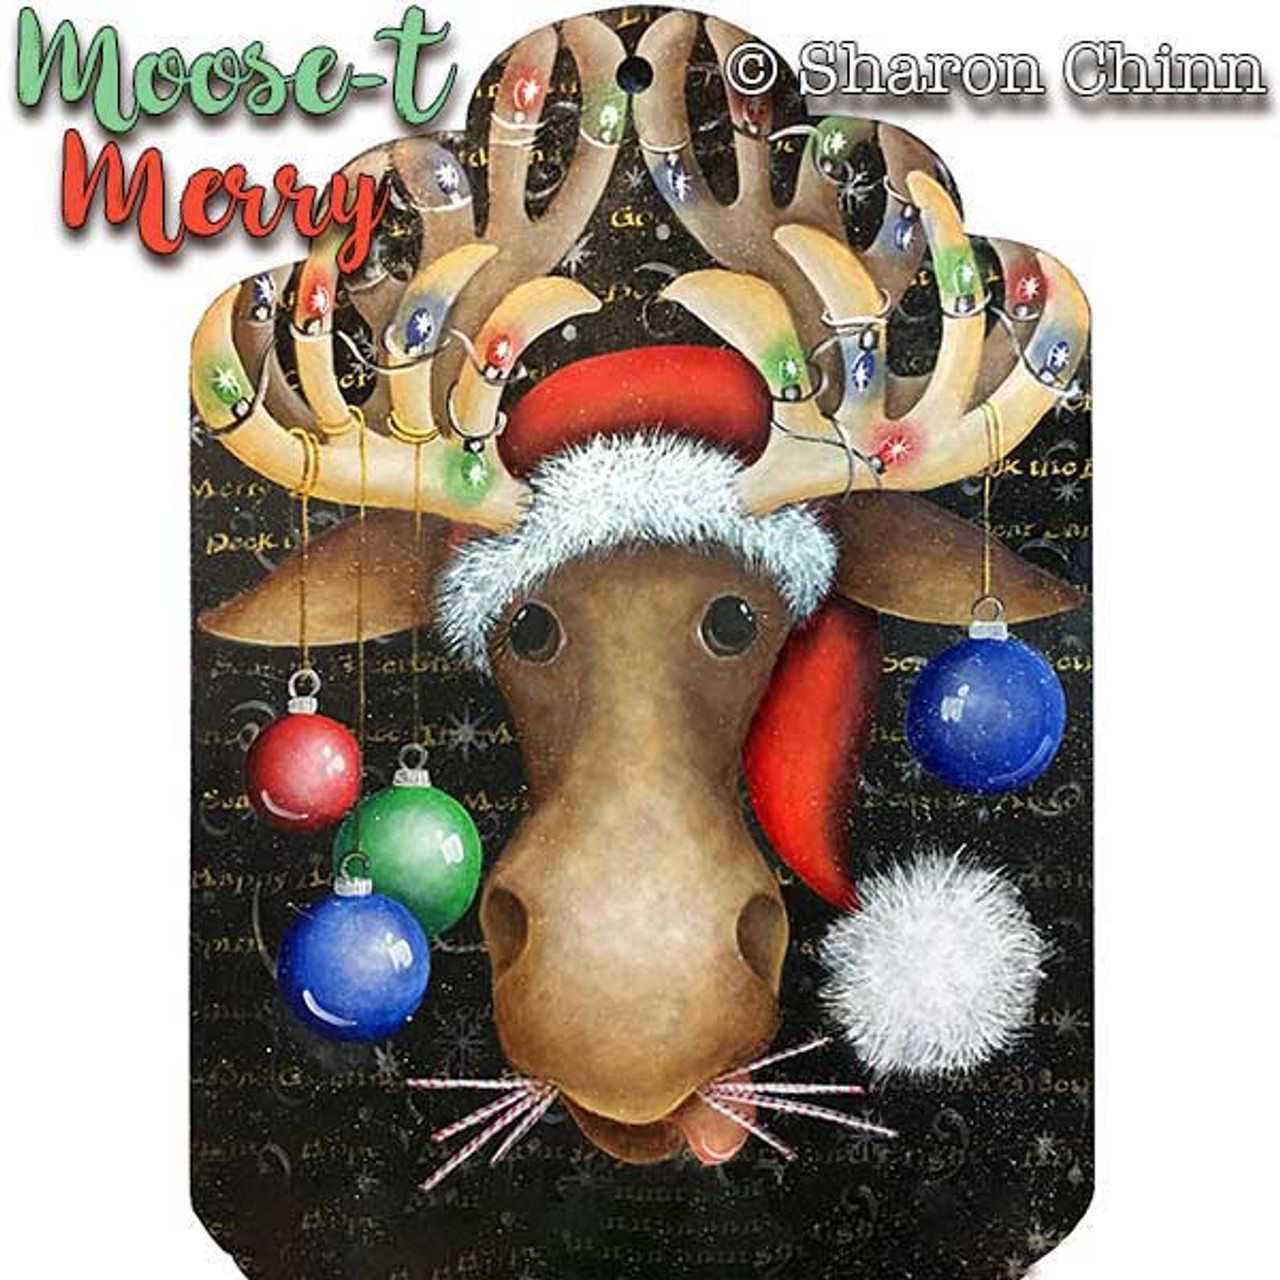 Moose-T Merry - E-Packet - Sharon Chinn